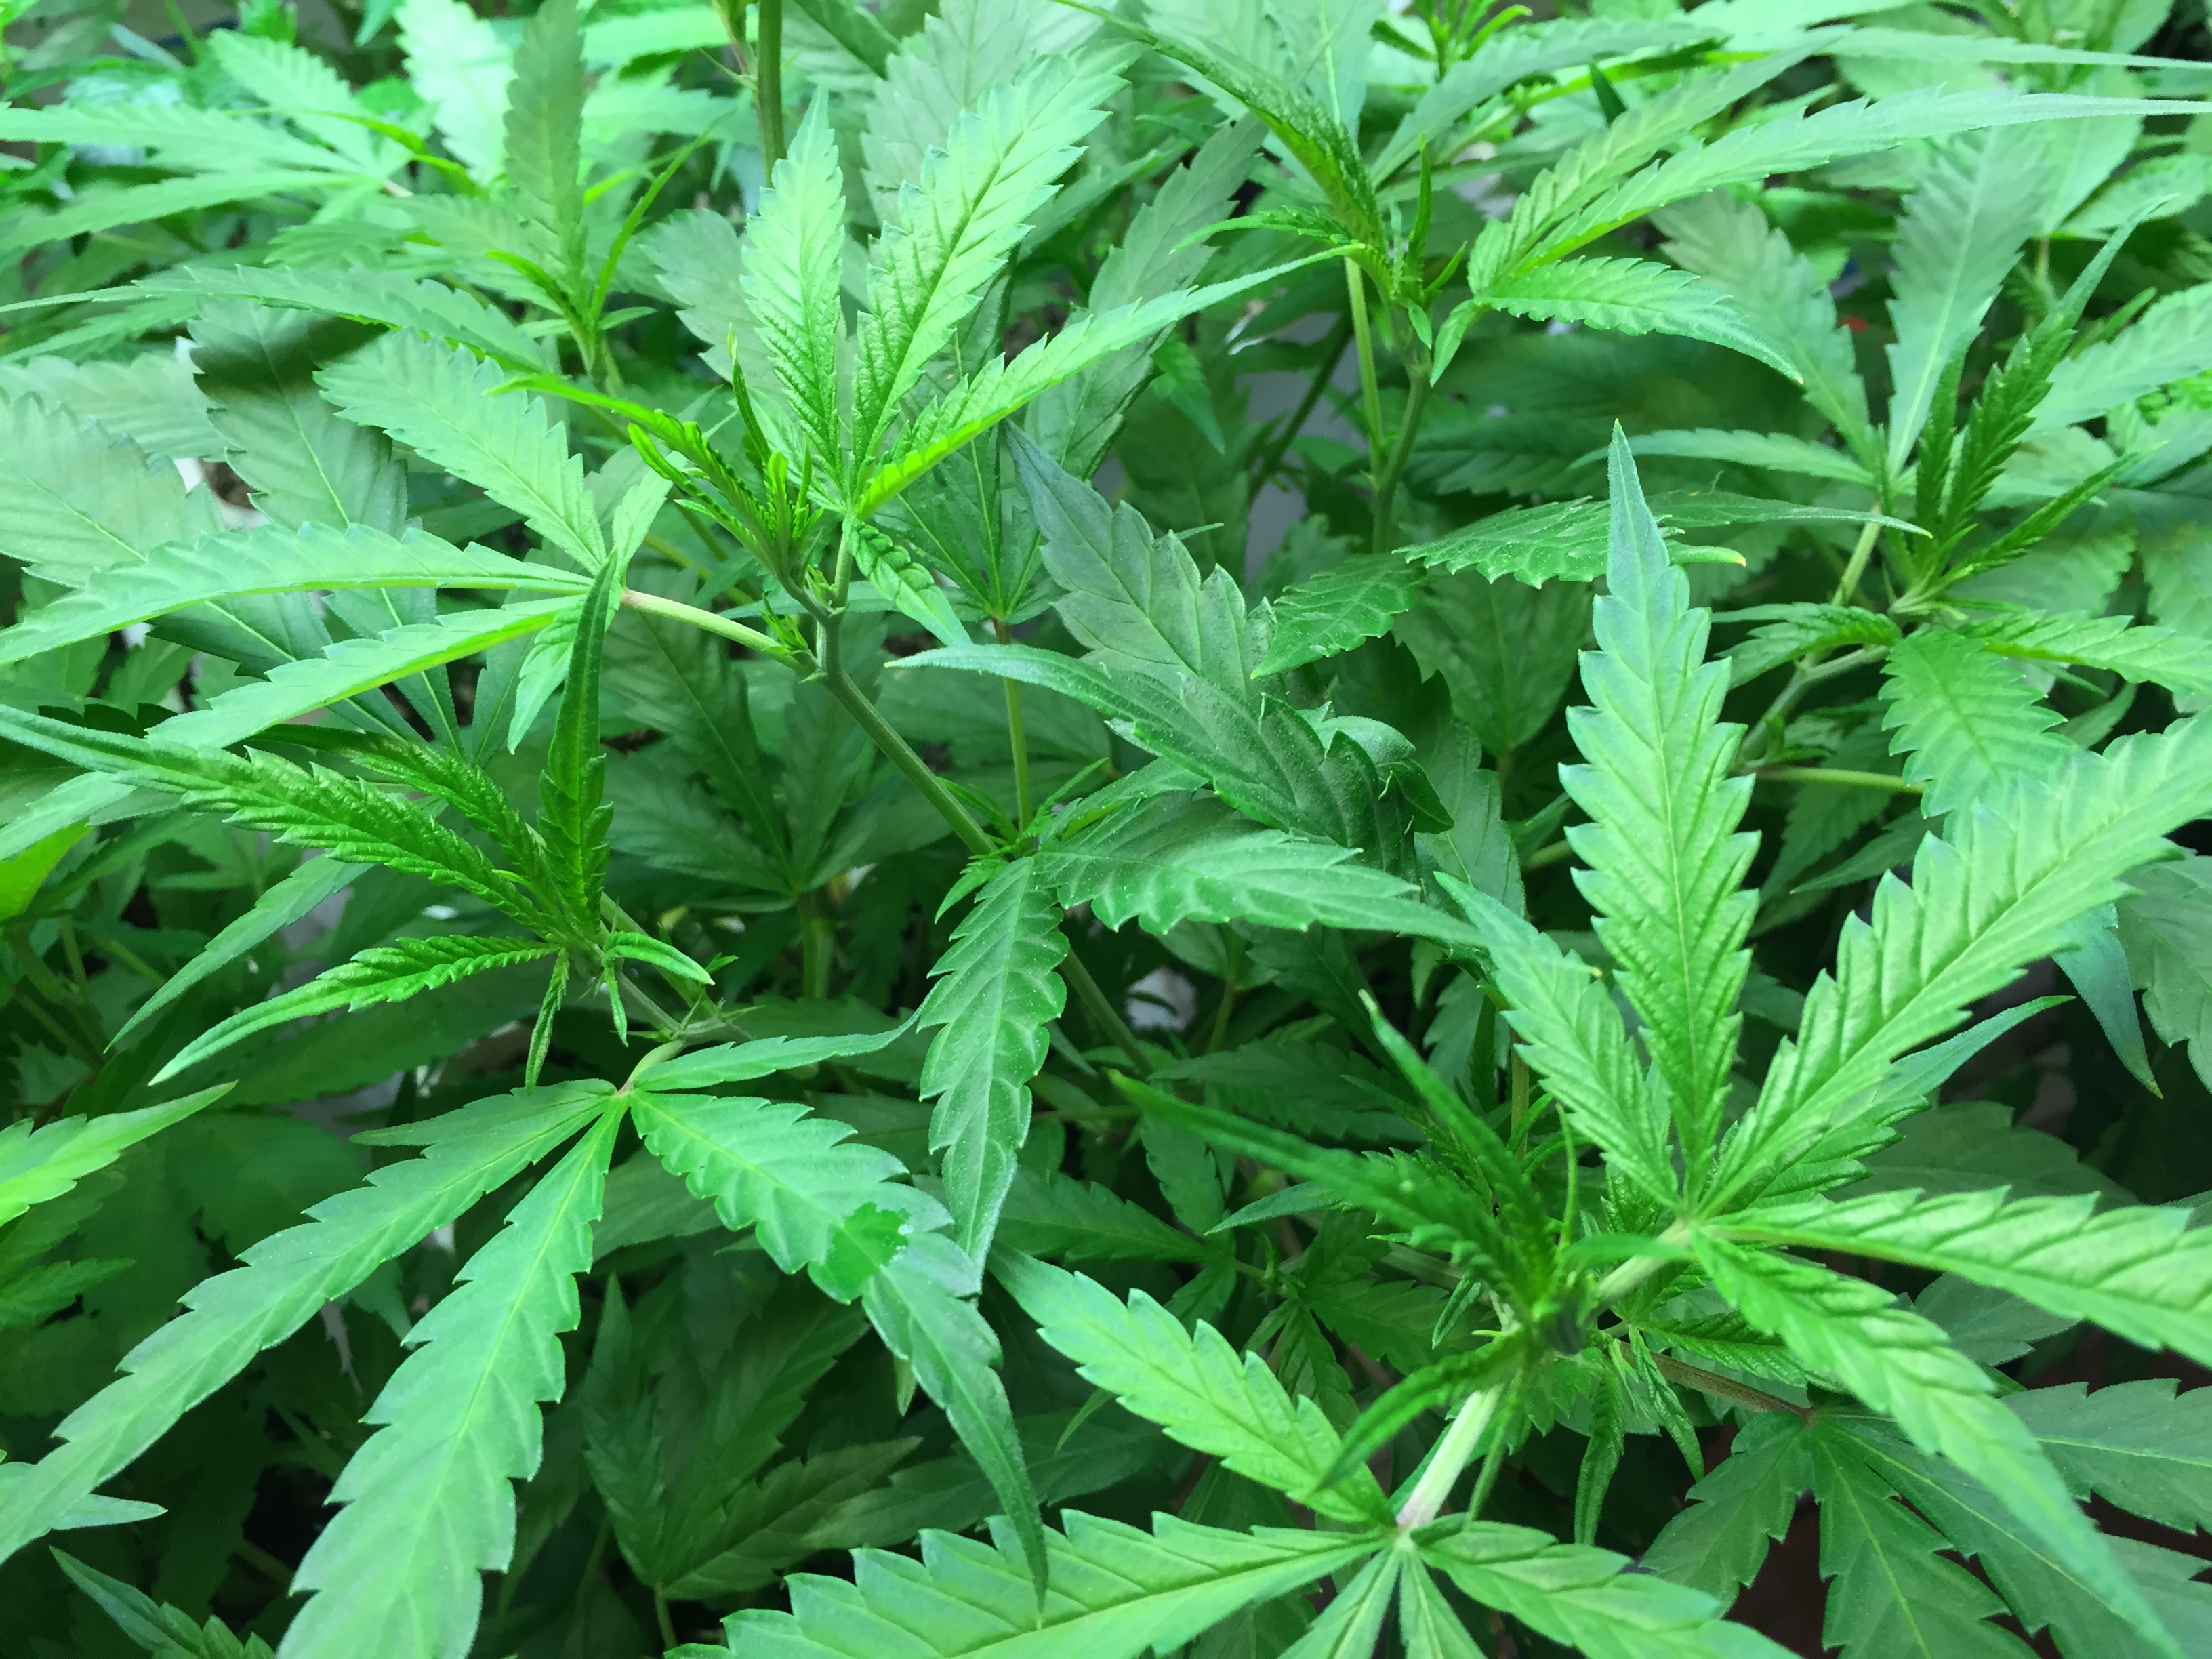 Video: Police find and destroy 35,000 marijuana plants the Vraem region